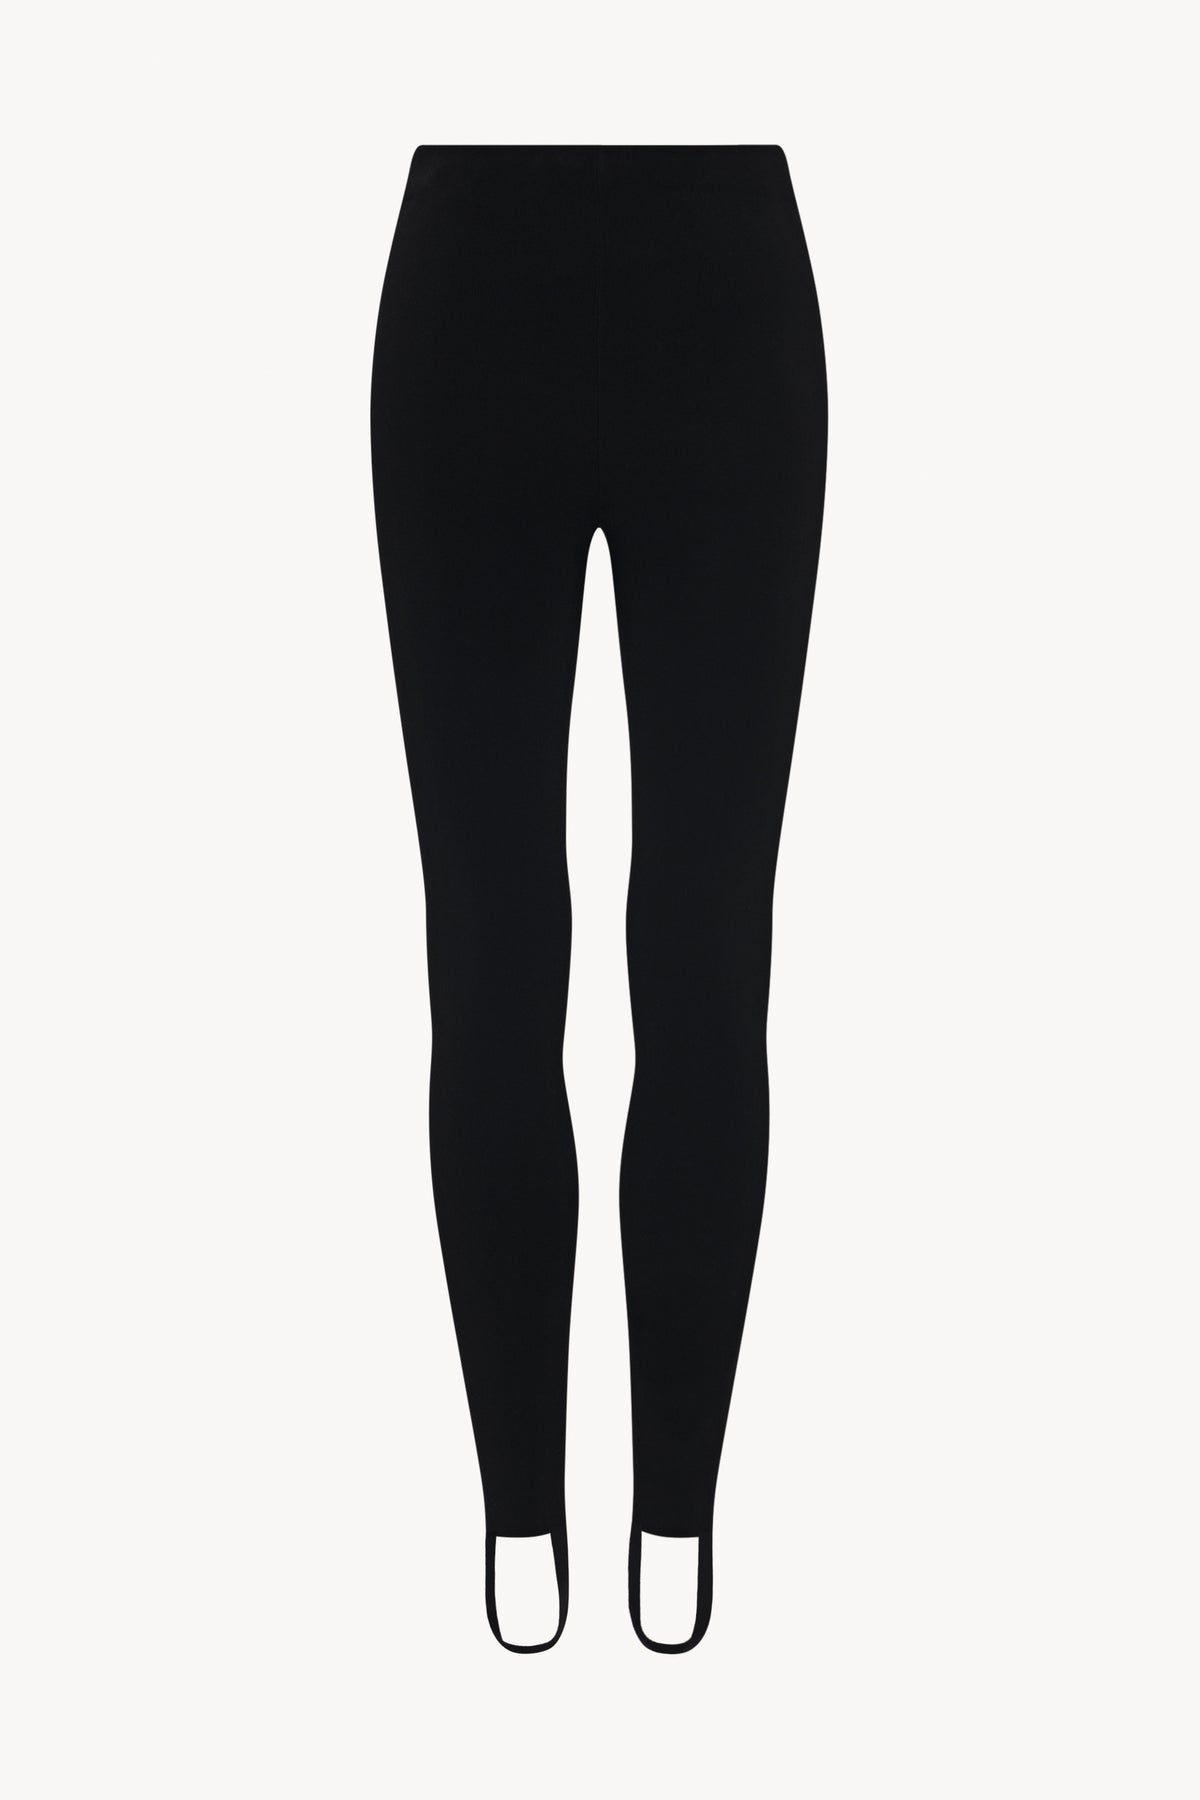 the-row-dyvan-leggings-black-amarees